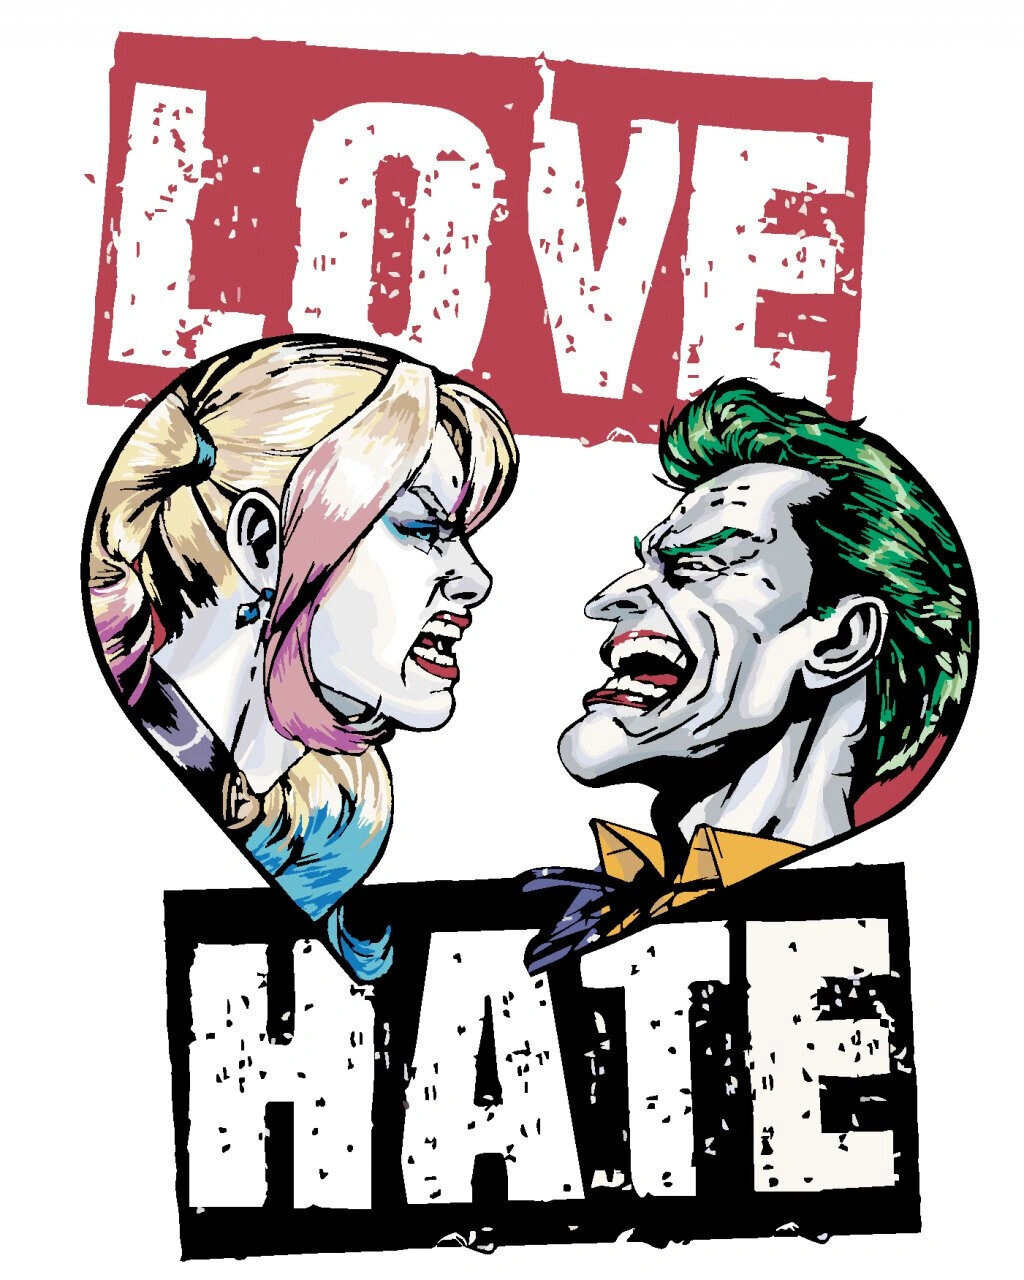 Malowanie po numerach Zuty Malowanie po numerach Harley Quinn i Joker (Batman)